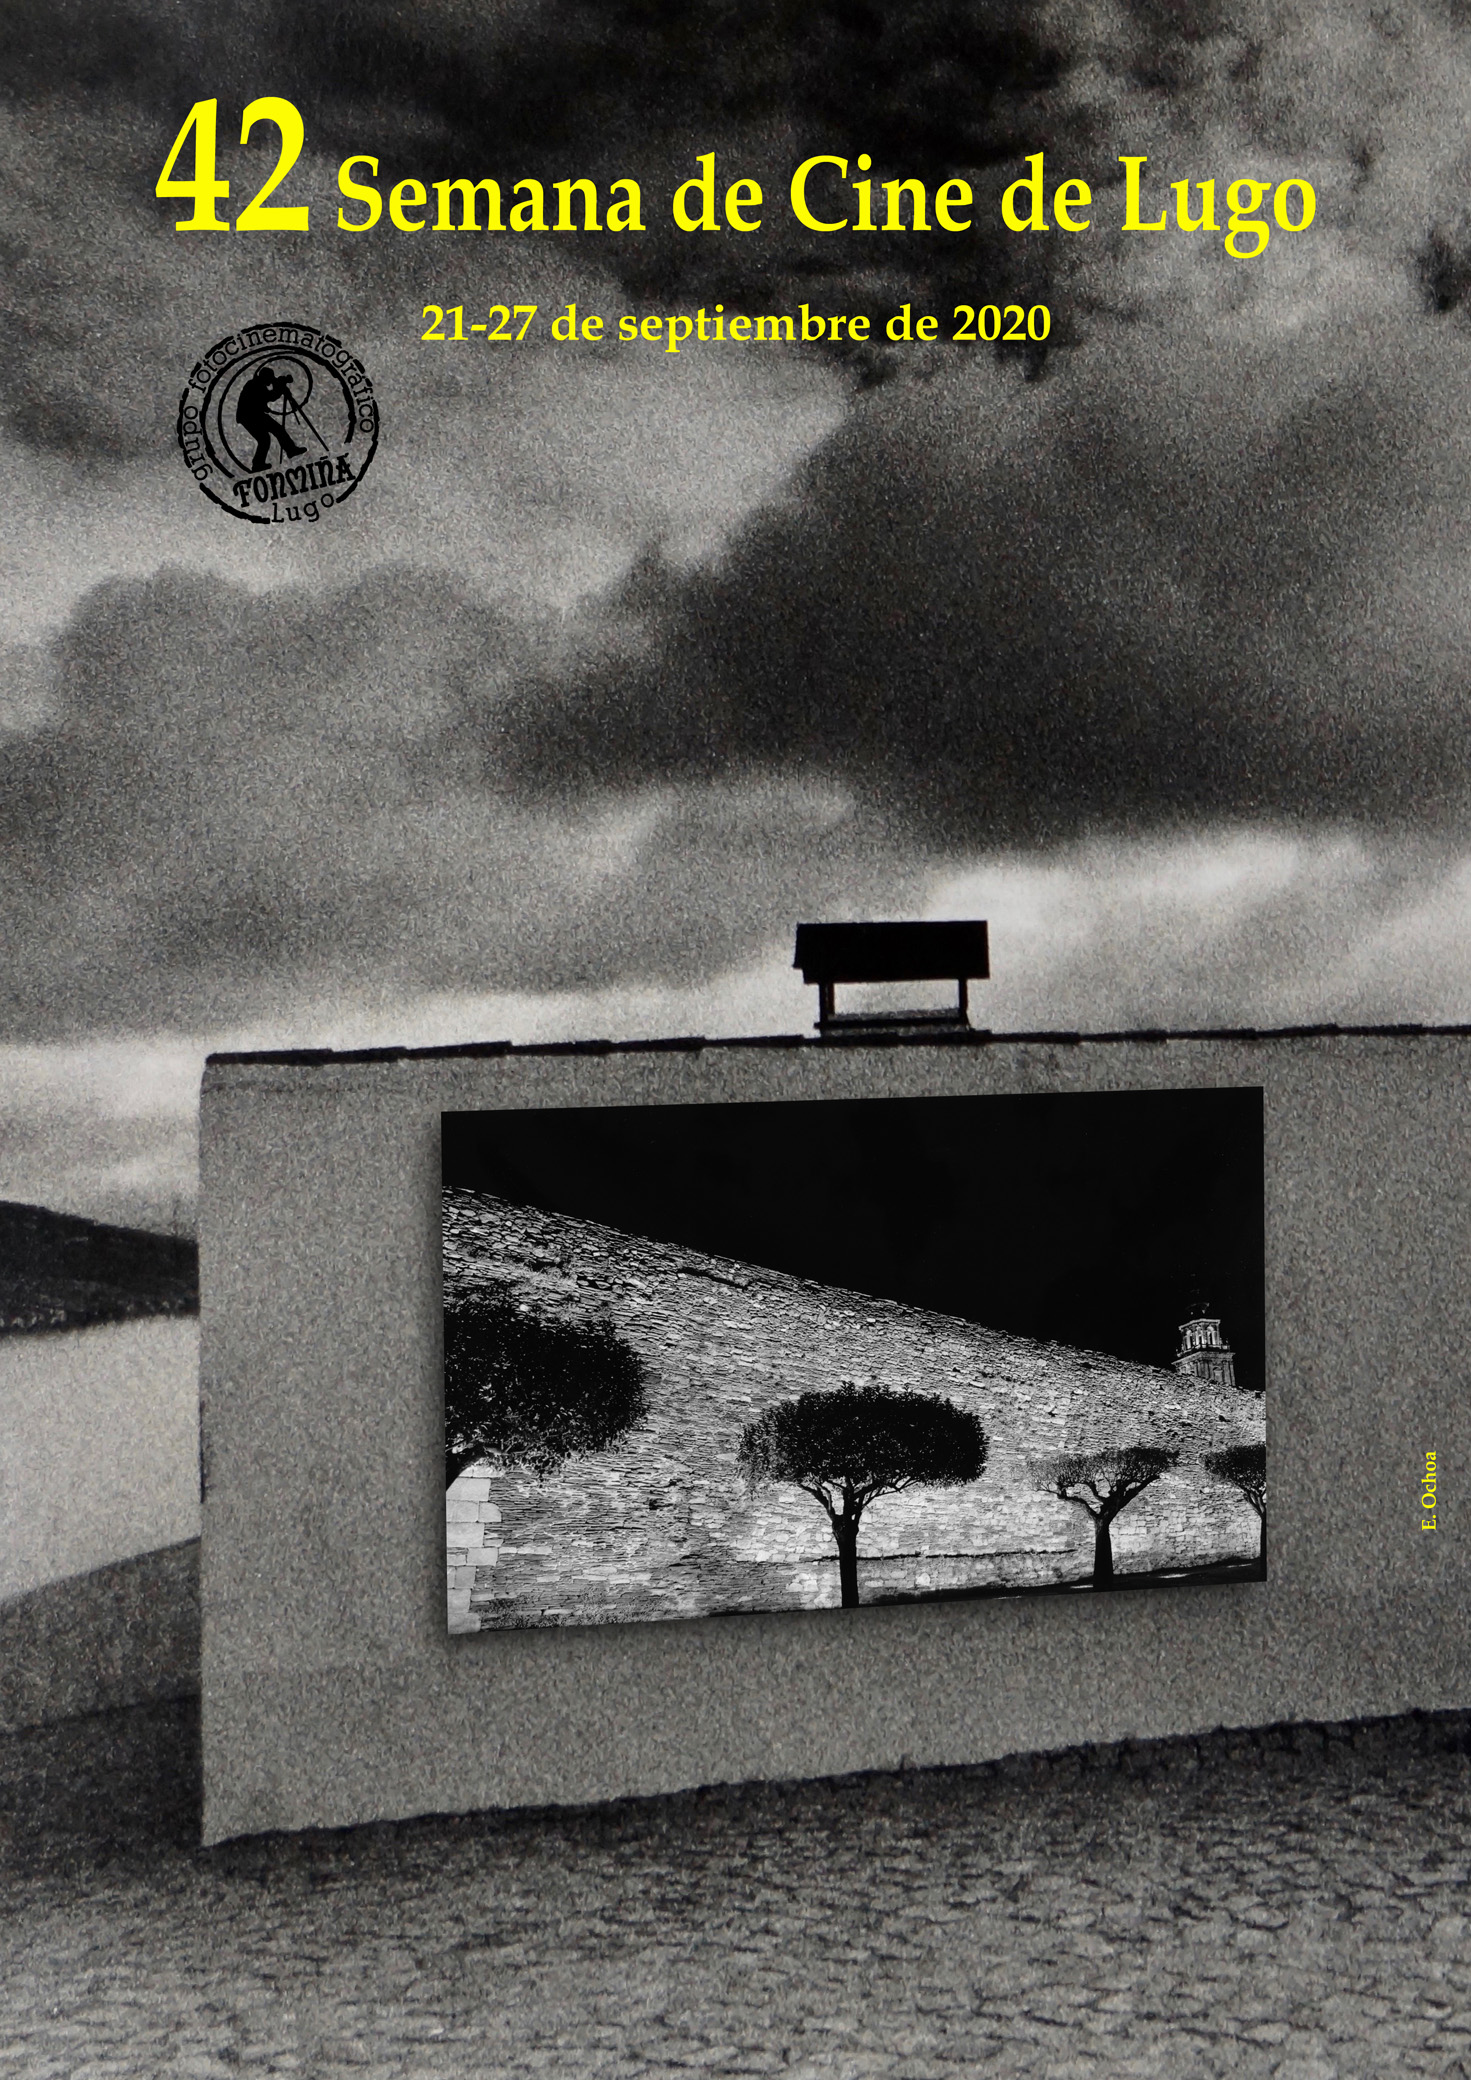 Cartel anunciador Semana de Cine de Lugo 2020 -